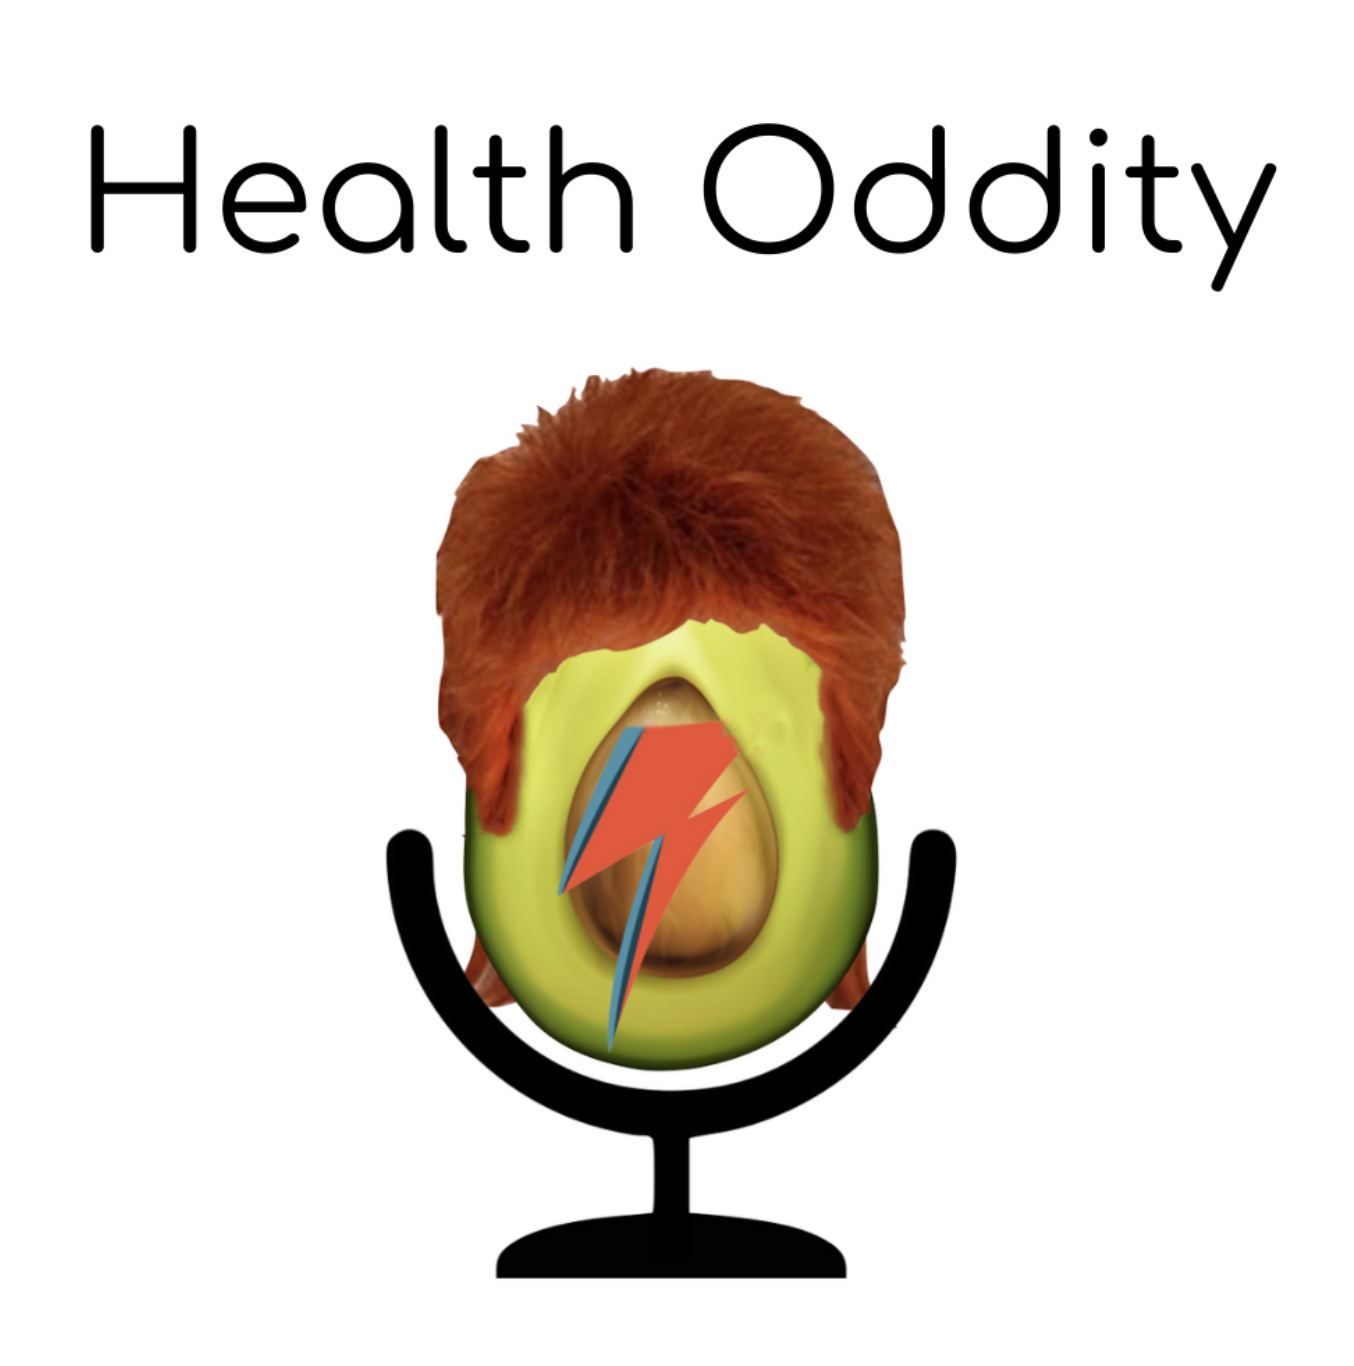 Health Oddity